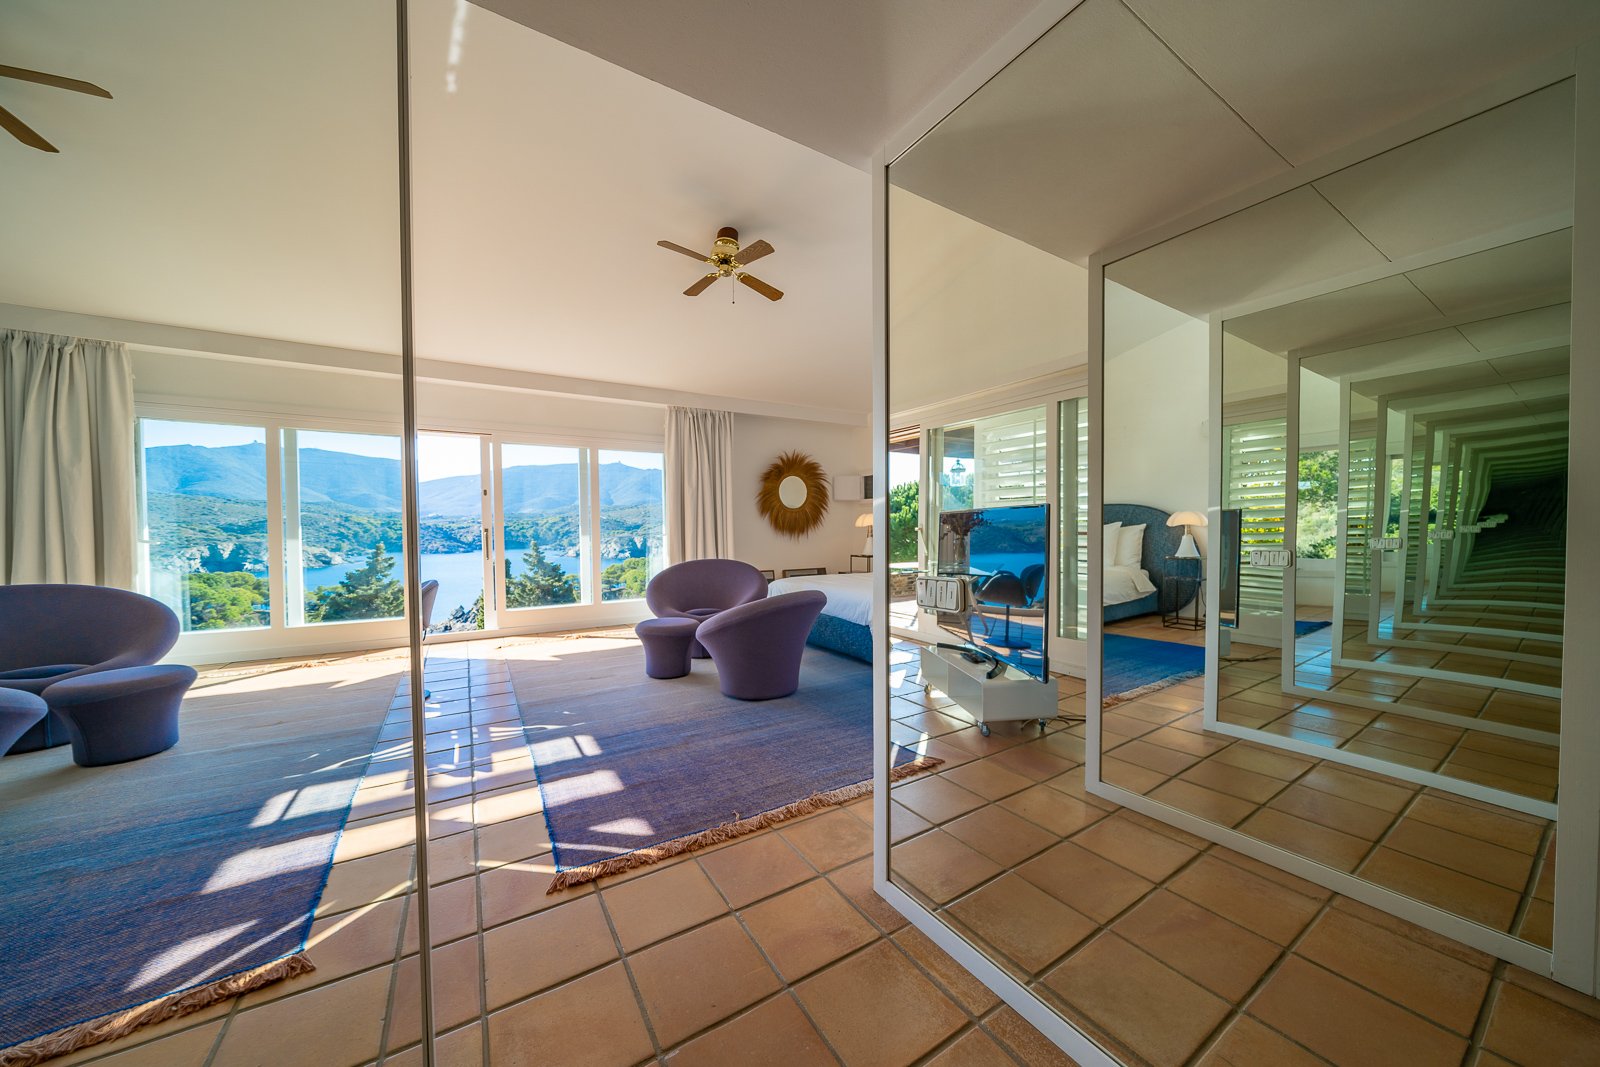 Prestigious house with a bedroom master sea view in Cadaqués, Spain